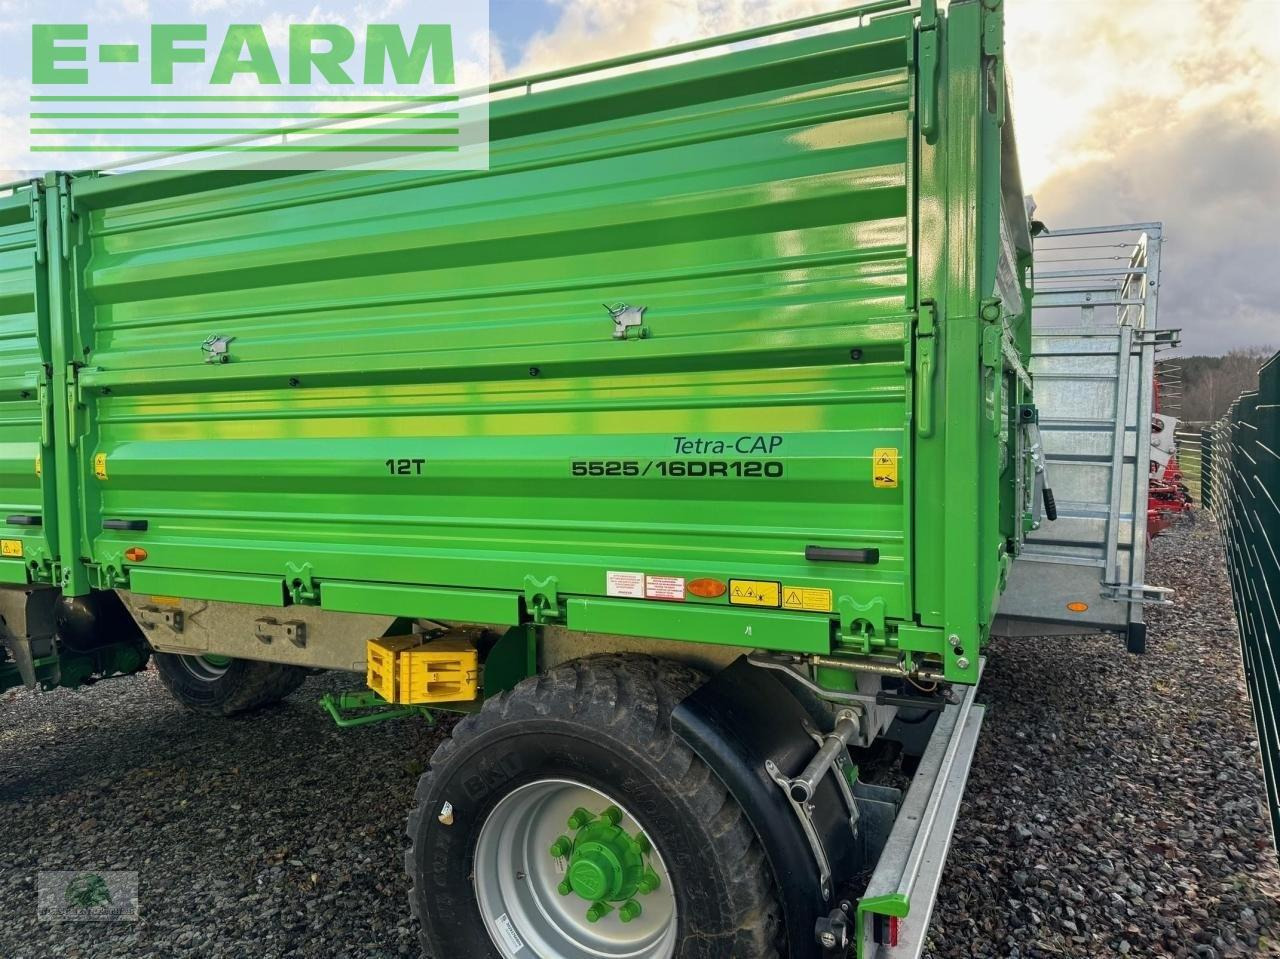 Farm tipping trailer/ Dumper Joskin tetra-cap 5525/16dr120: picture 3